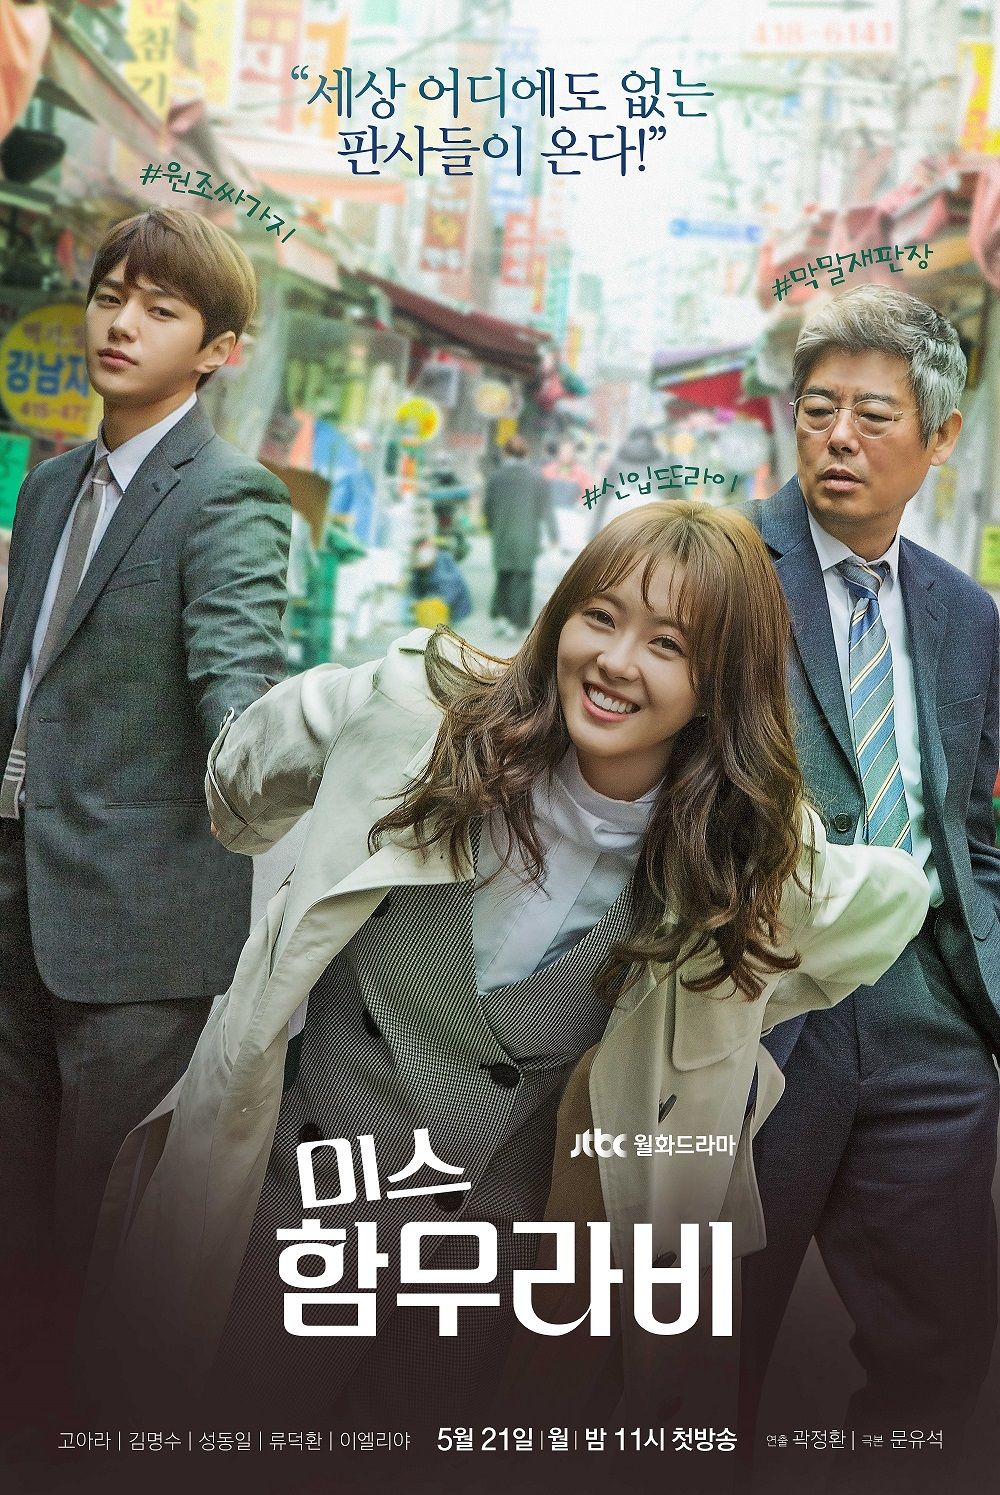 Download Drakorindo Download Drama Korea Sub Indo Pics - canaderican